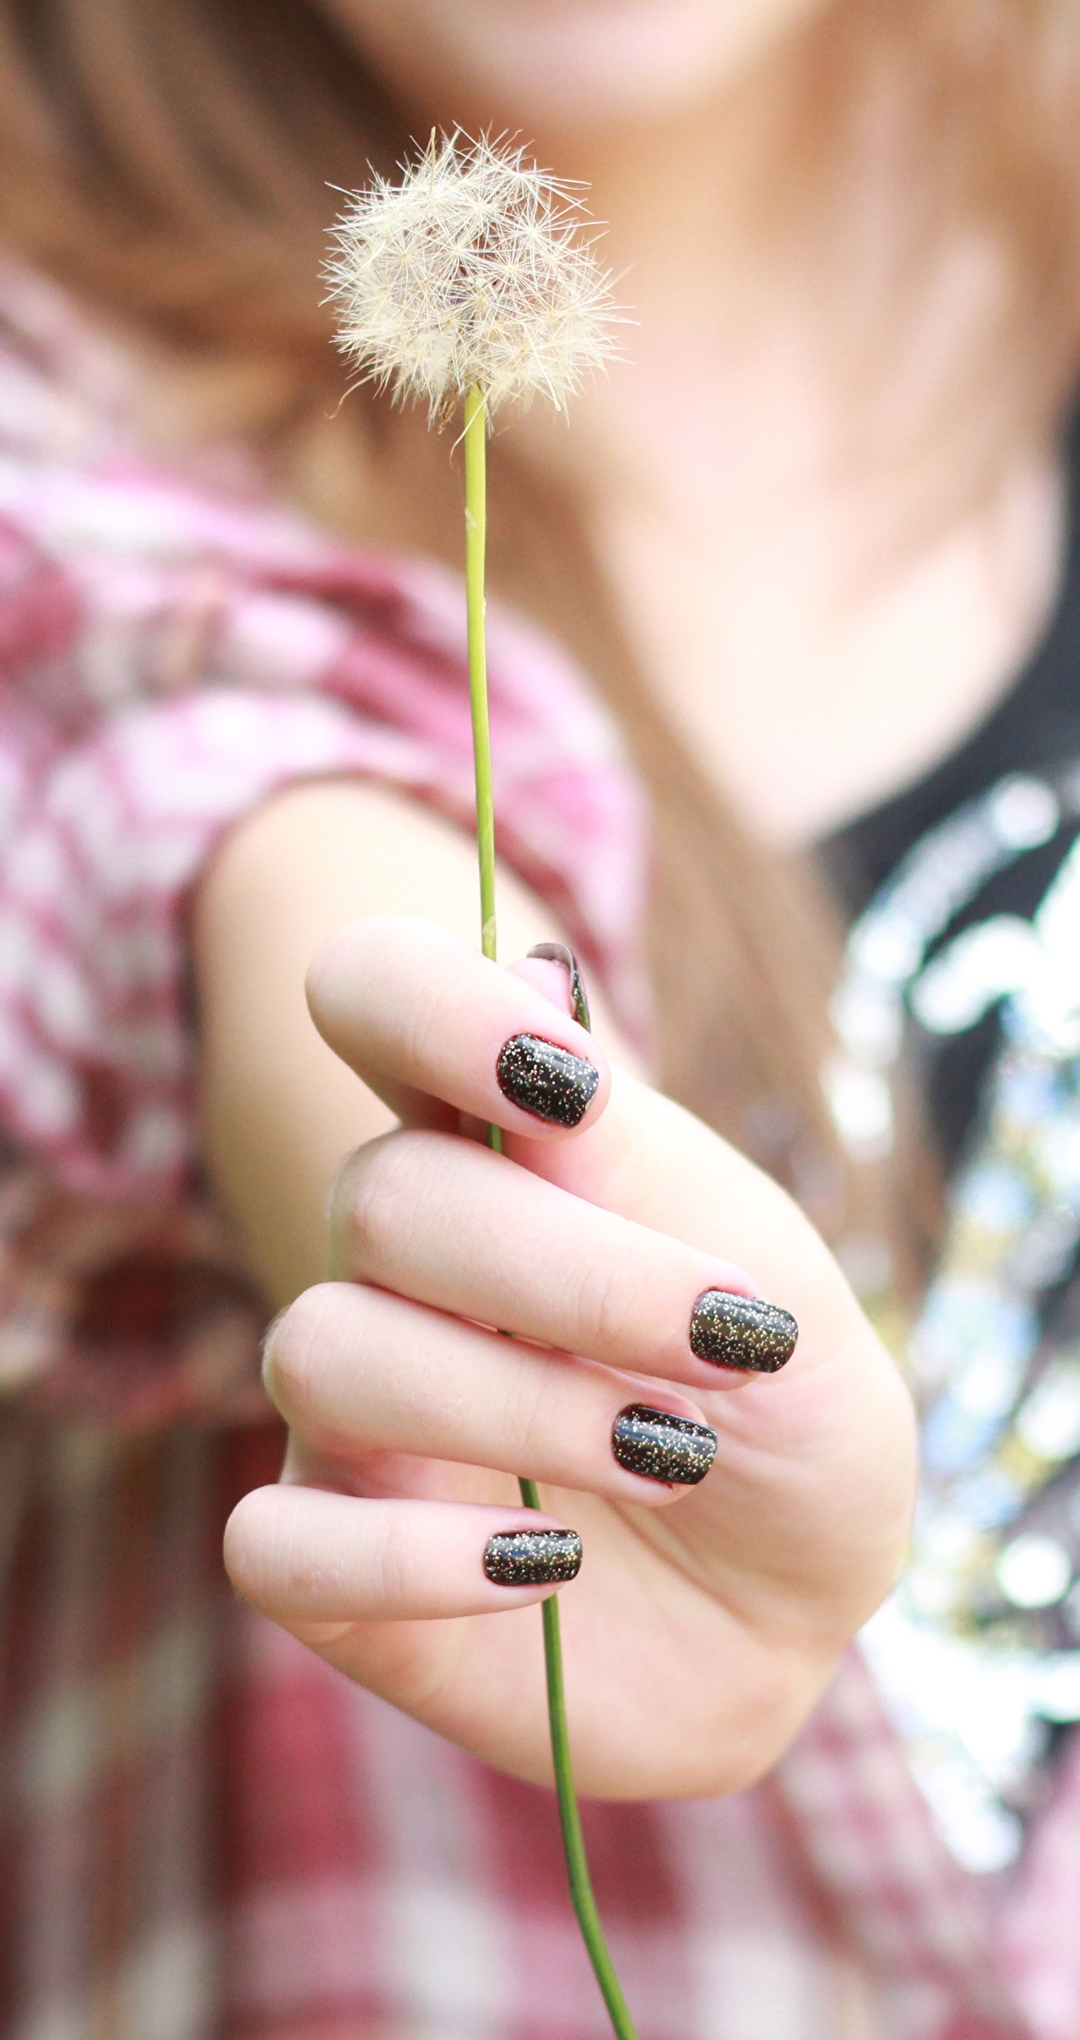 Image: Girl, hand, manicure, dandelion, blur